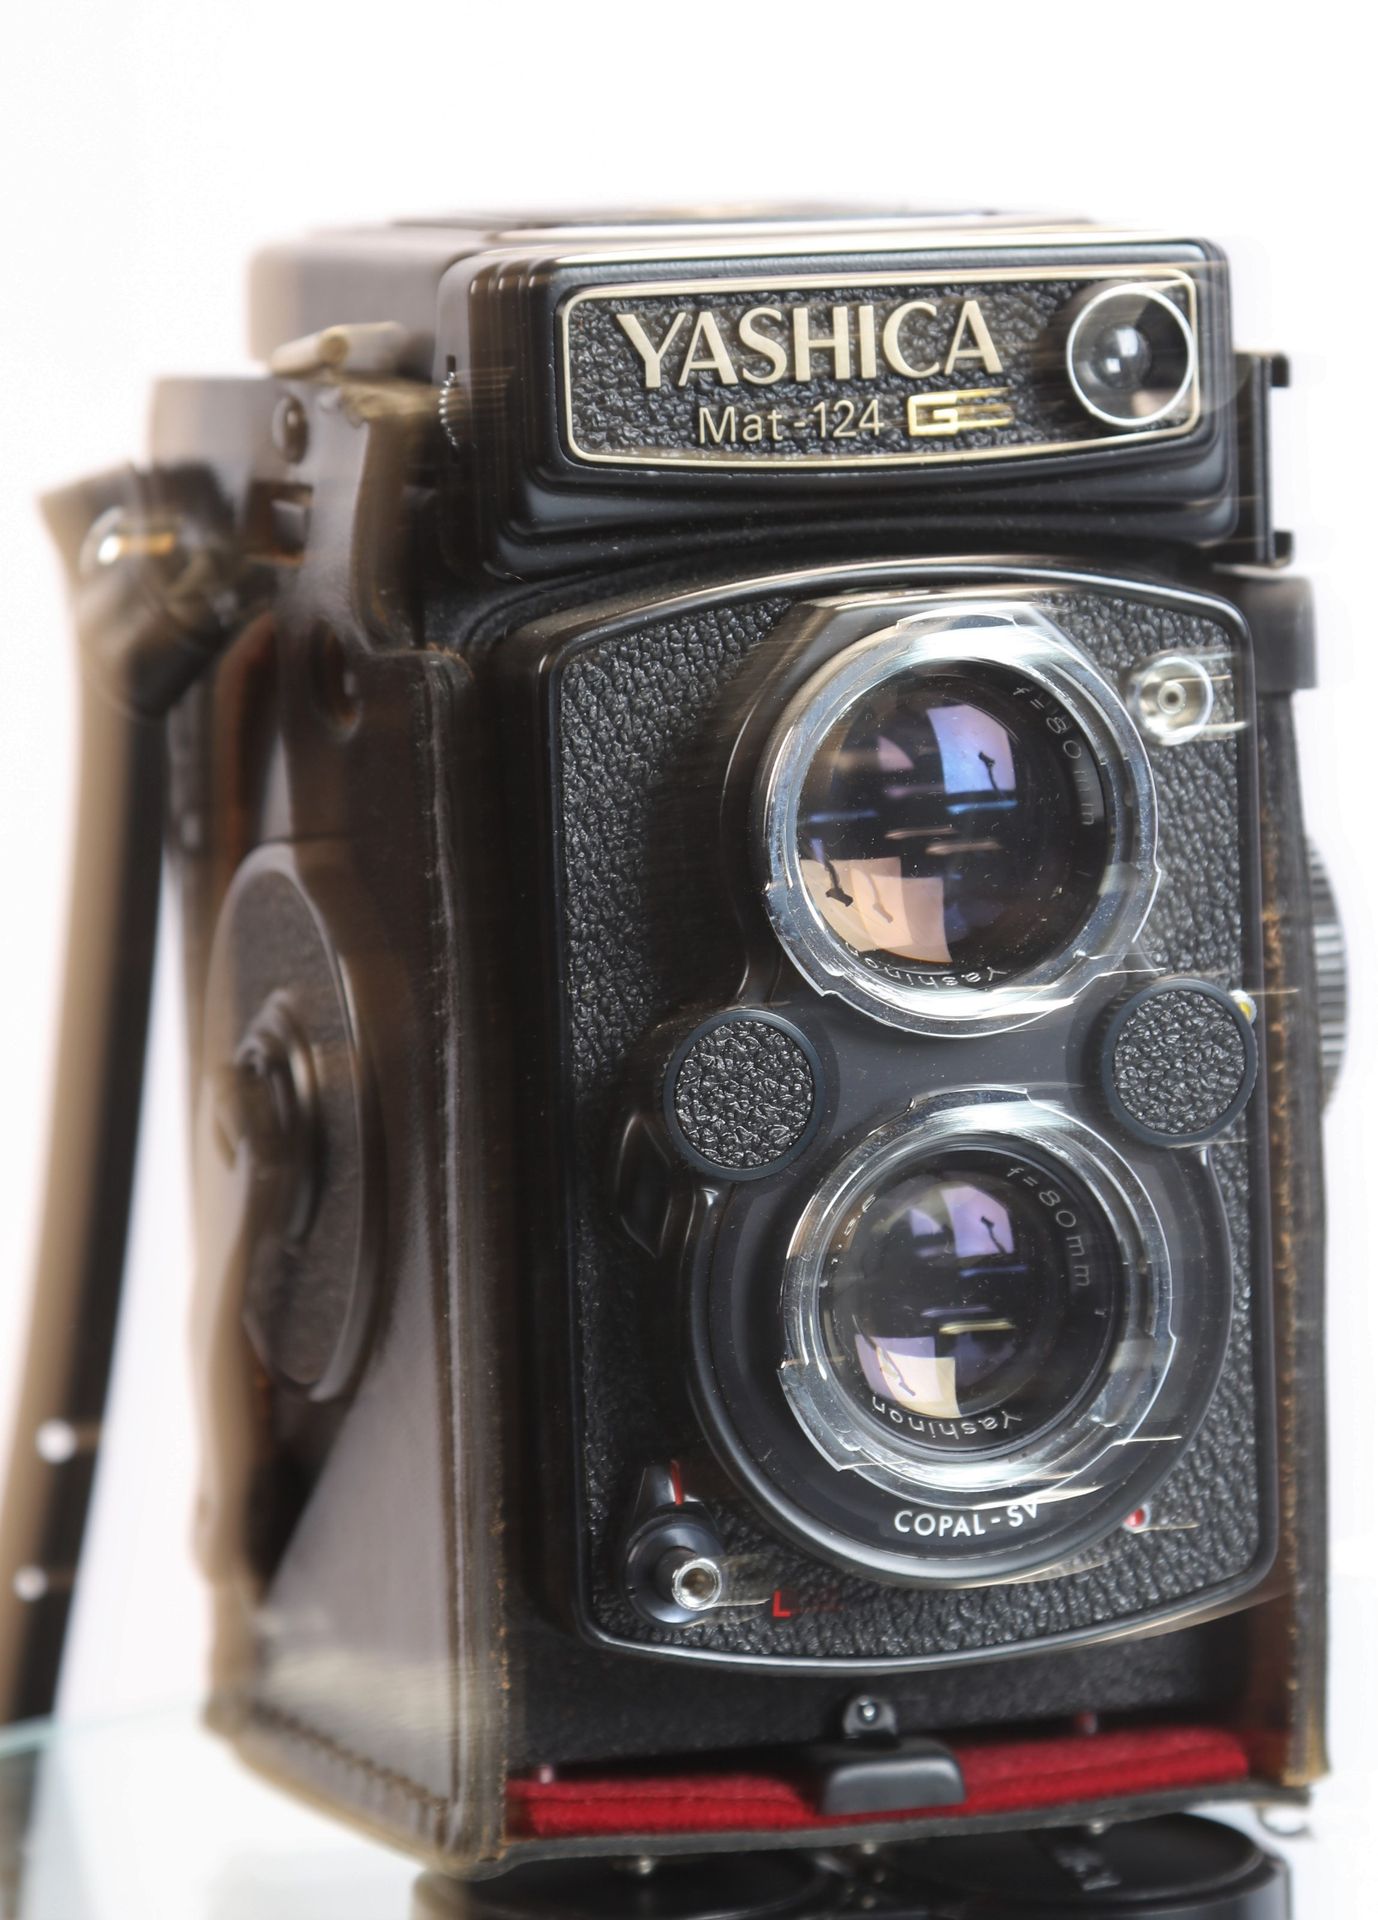 Null YASHICA G, Mat 124 G, n°6120767, étui en cuir, appareil photographique